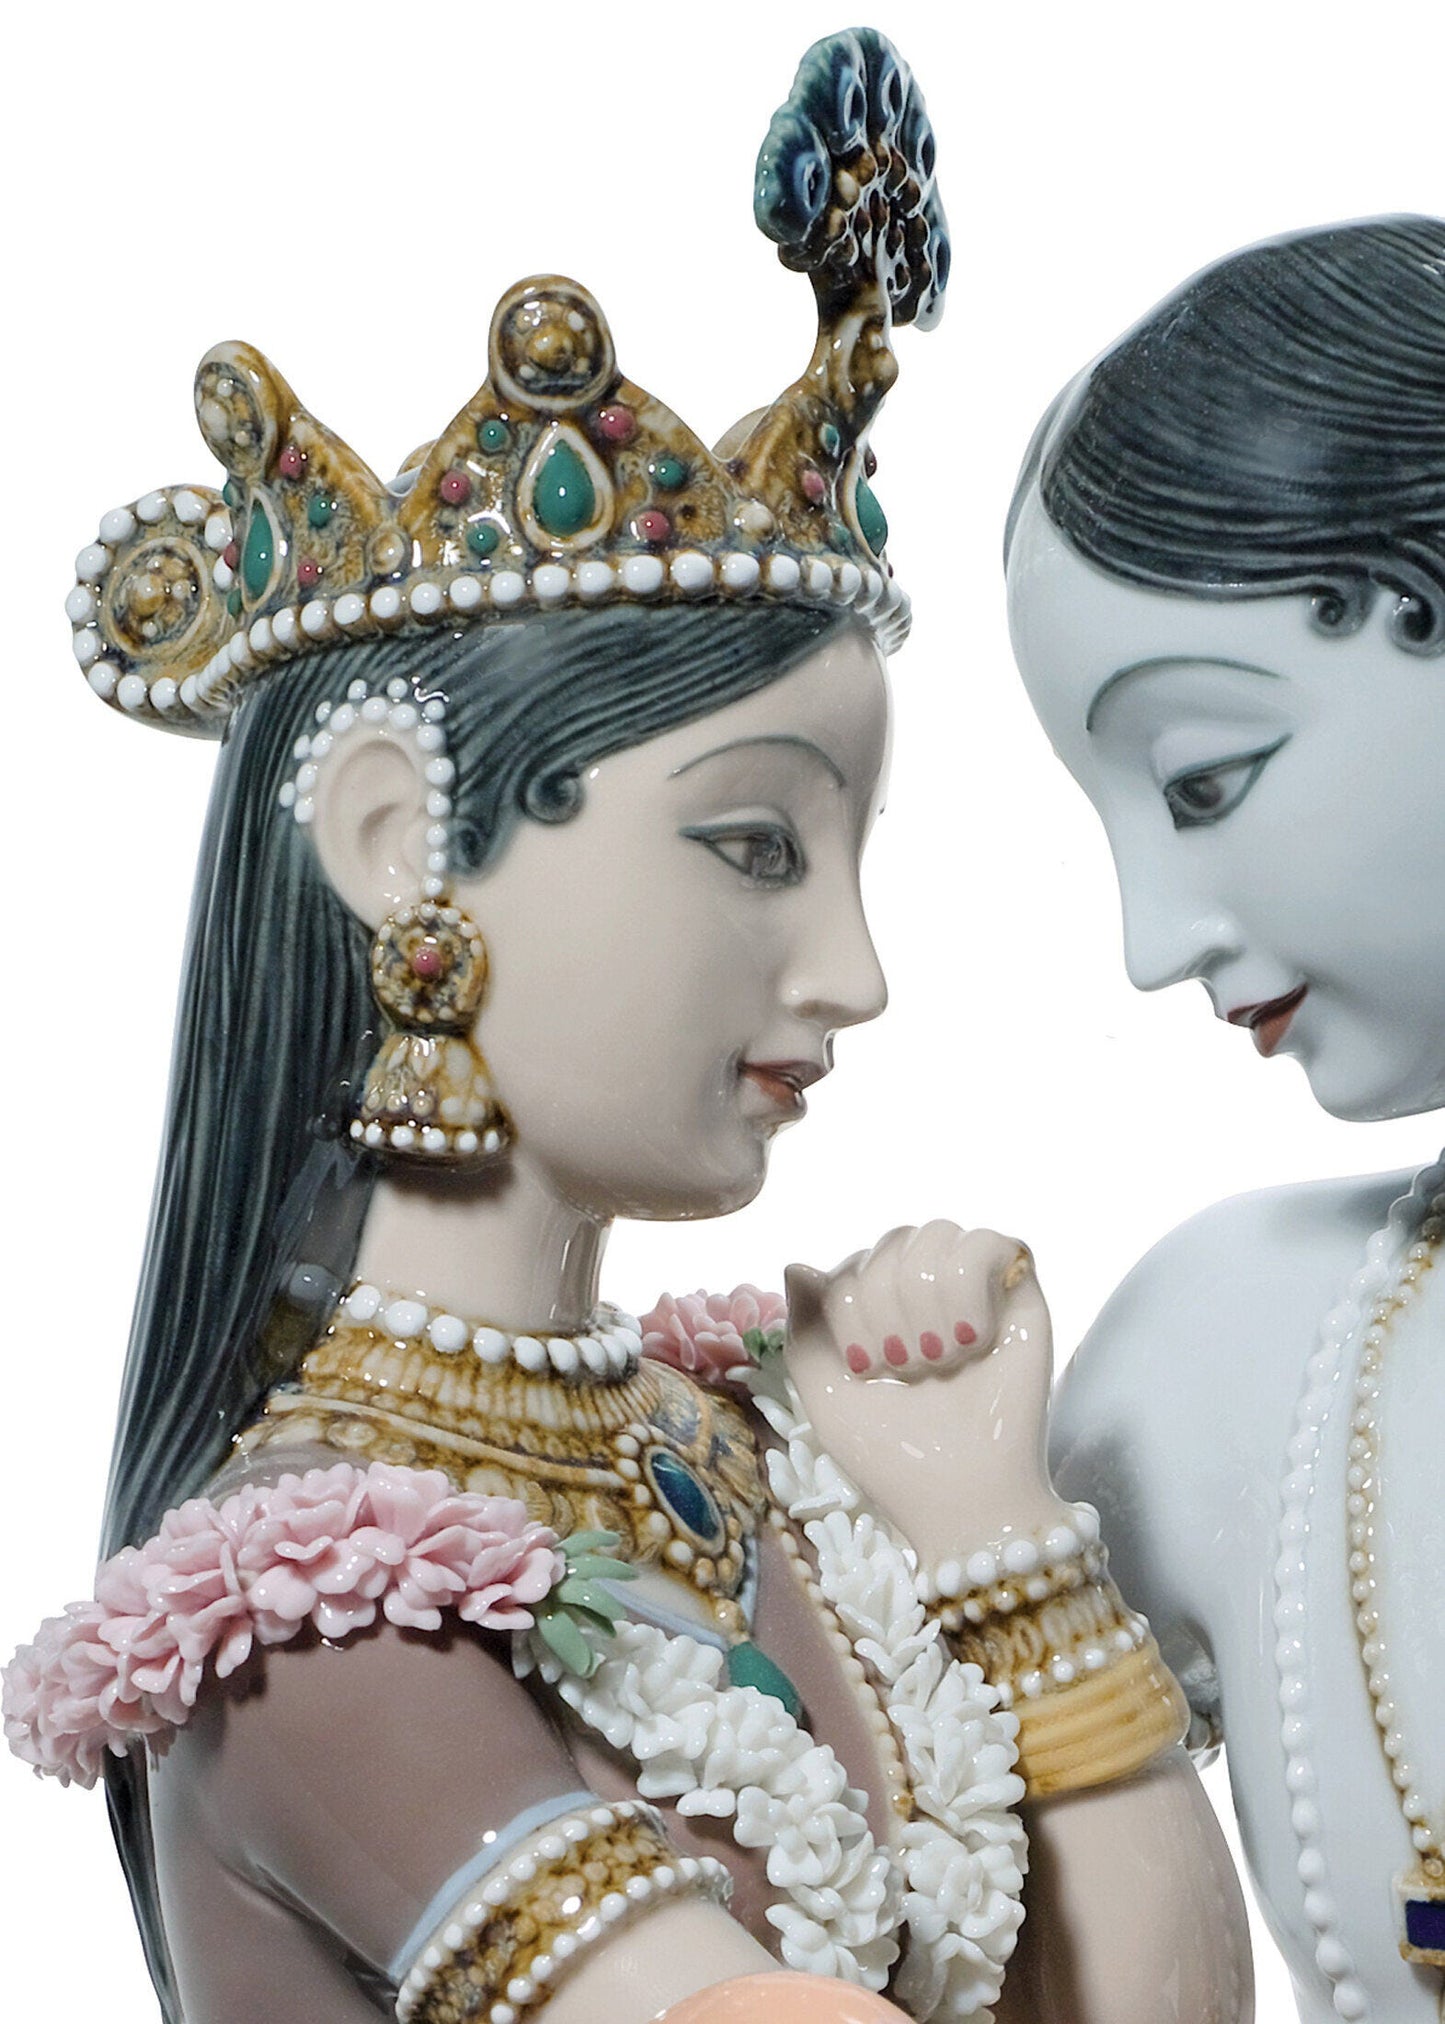 Divine Love Couple Figurine Limited Edition